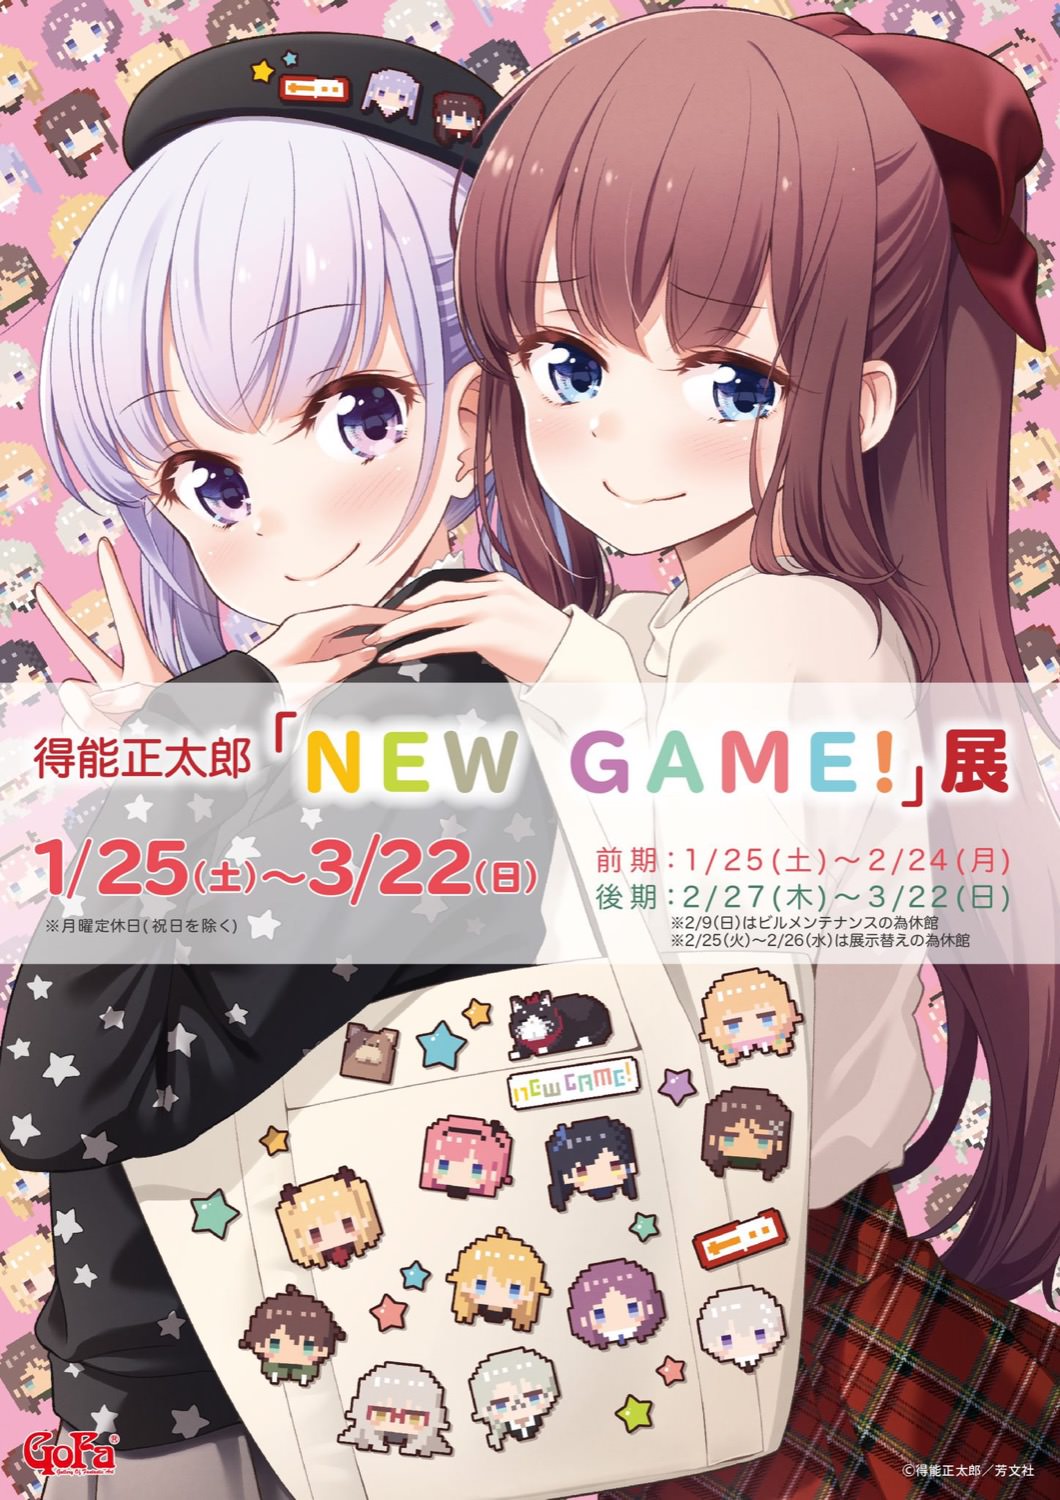 NEW GAME!展 in GoFa表参道 1.25-3.22 得能先生直筆サイングッズ等登場